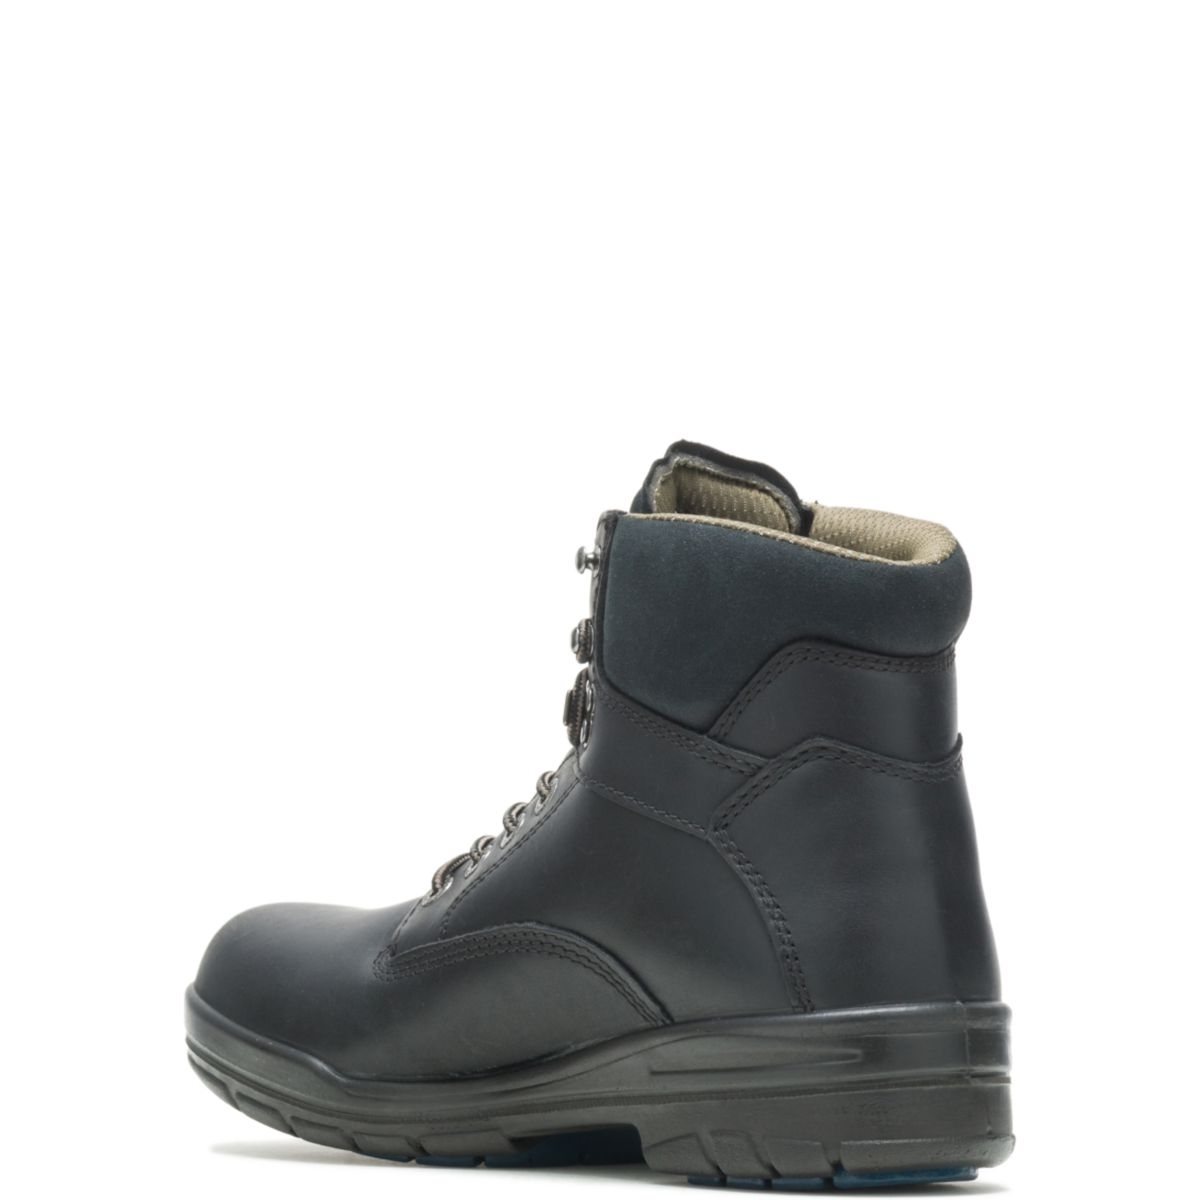 WOLVERINE Men's 6 DuraShocksÂ® Slip Resistant Direct-Attached Lined Soft Toe Work Boot Black - W03123 14 WIDE BLACK - BLACK, 9 Wide